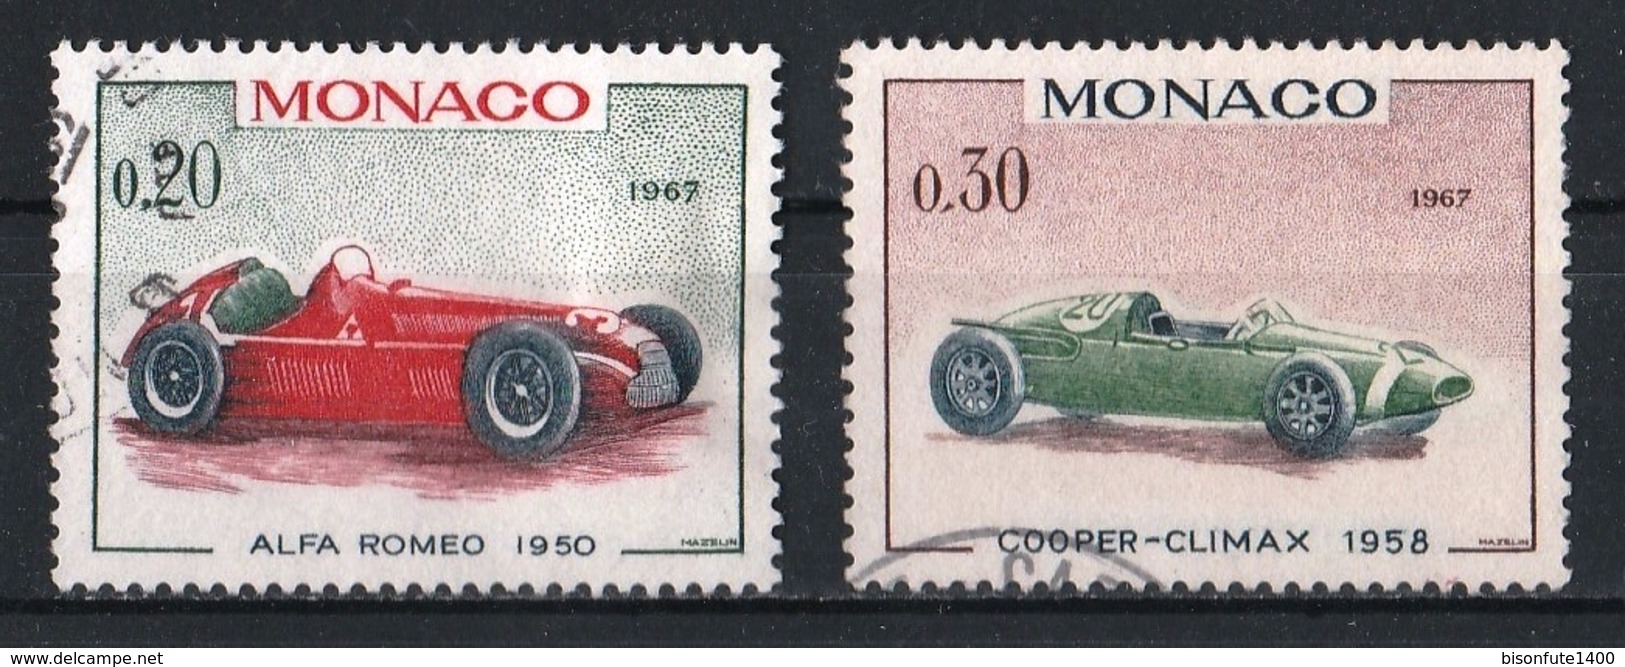 Monaco 1967 : Timbres Yvert & Tellier N° 708 - 709 - 710 - 711 - 713 Et 715. - Oblitérés